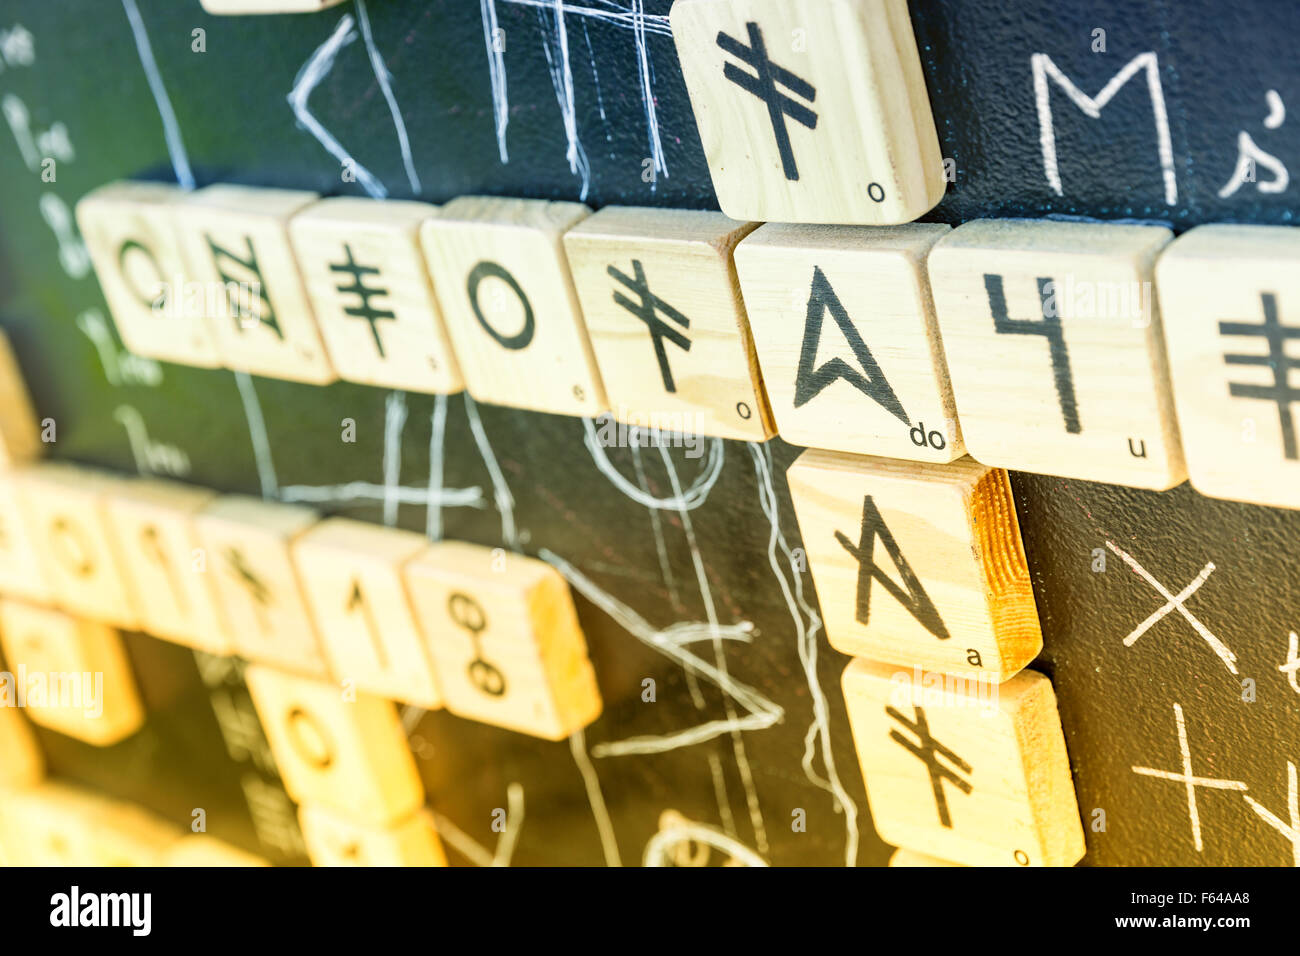 Hieroglyphes on crossword puzzle closeup Stock Photo